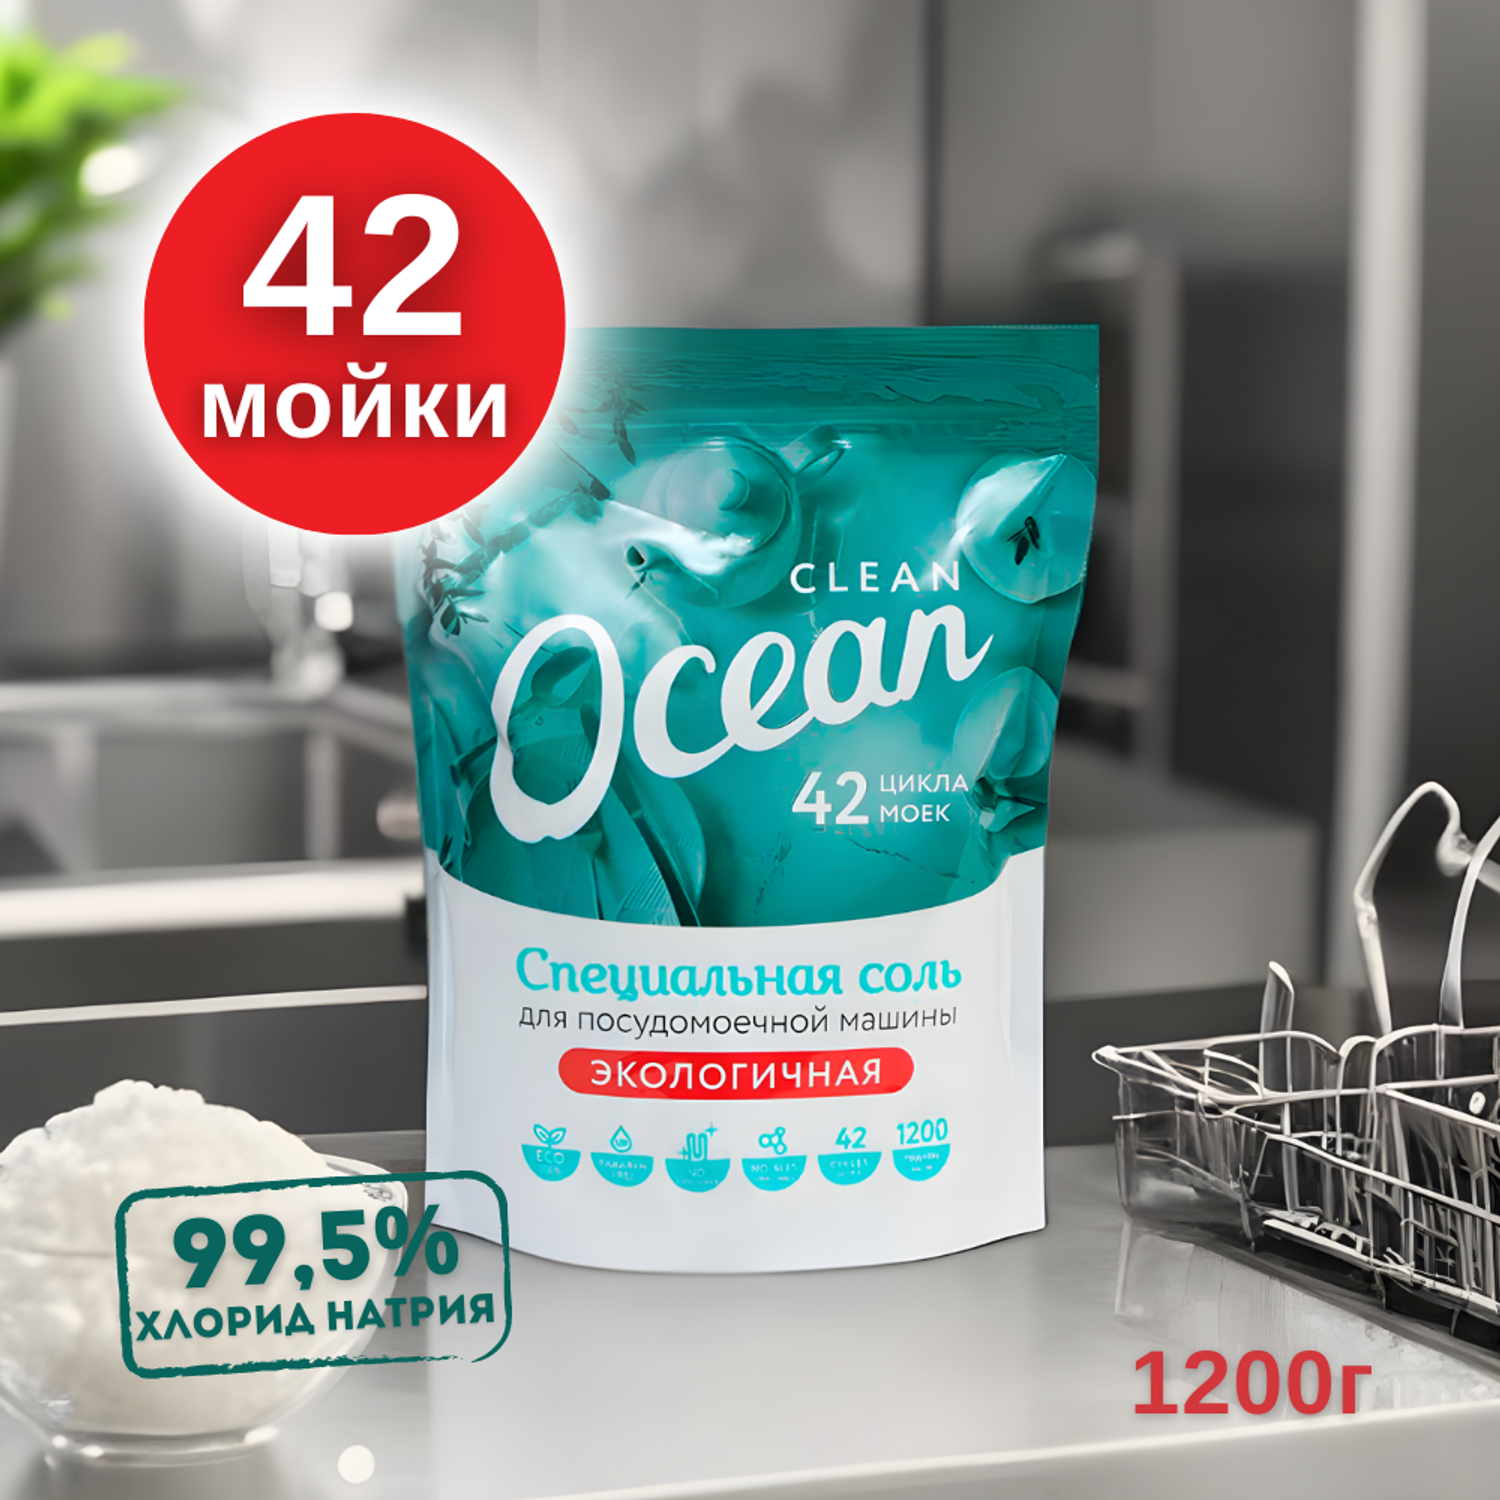 Соль Laboratory KATRIN Ocean clean для посудомоечных машин 1200гр - фото 1